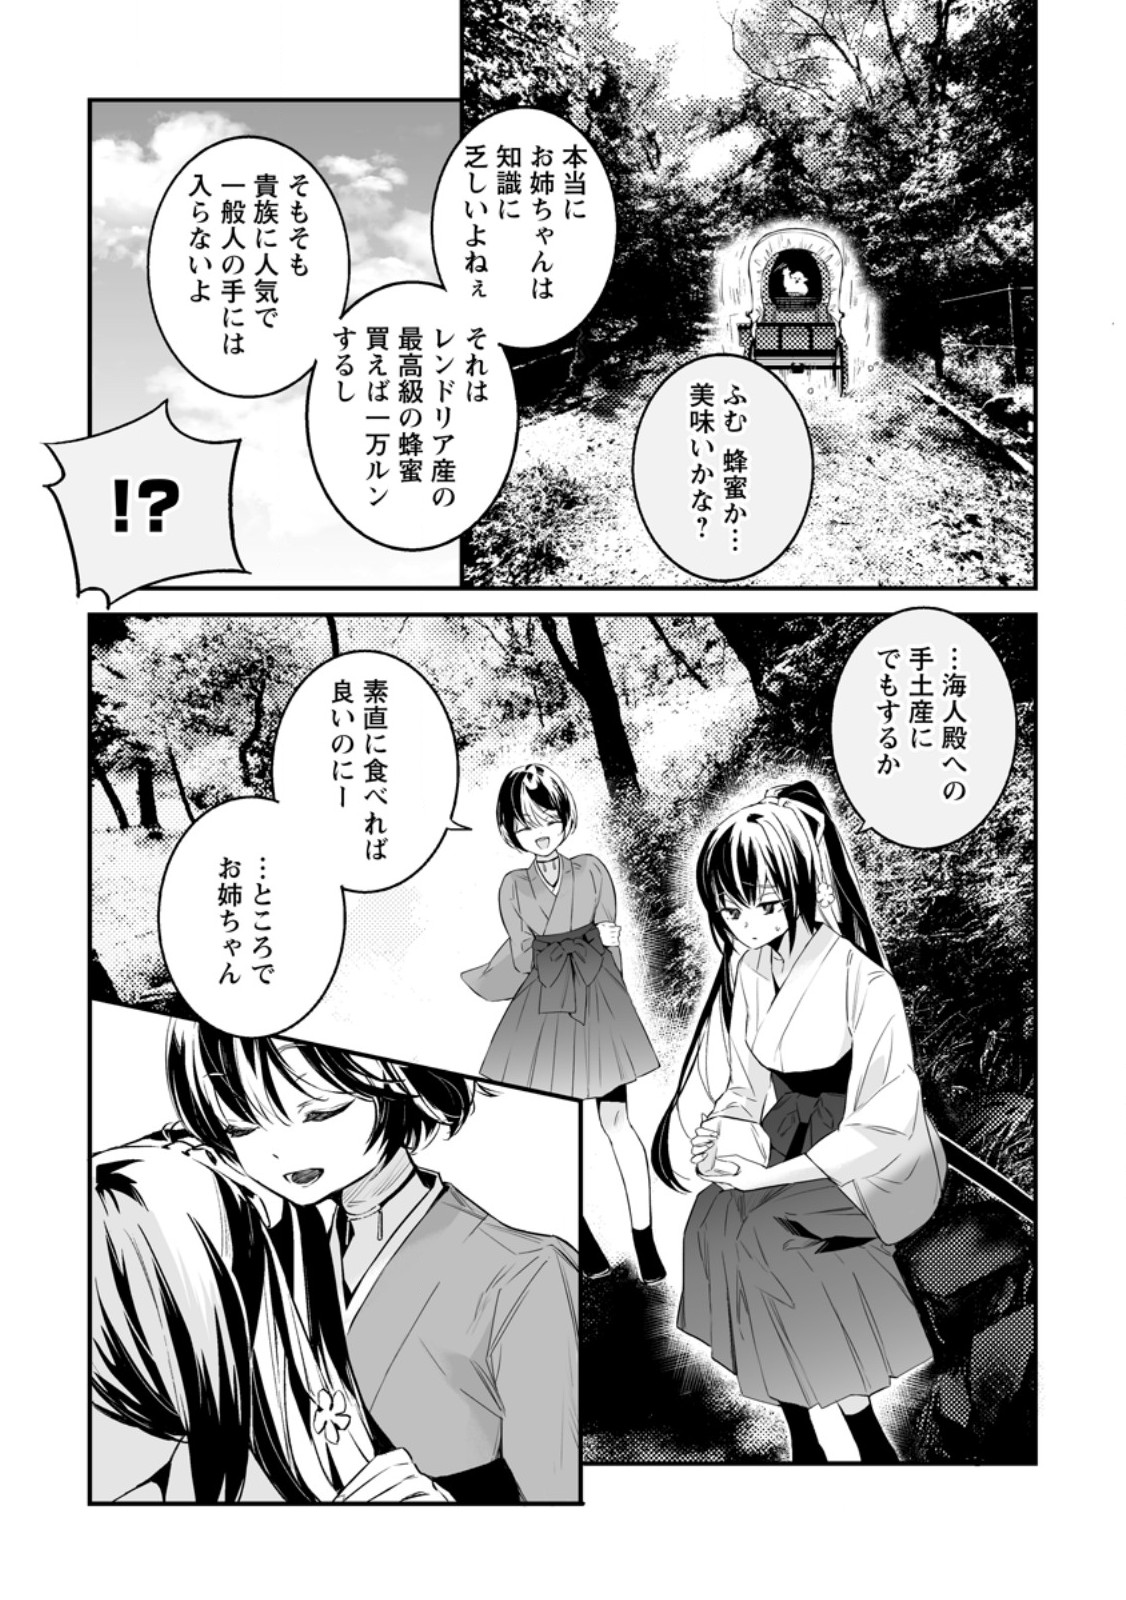 Hakui no Eiyuu - Chapter 32.2 - Page 1